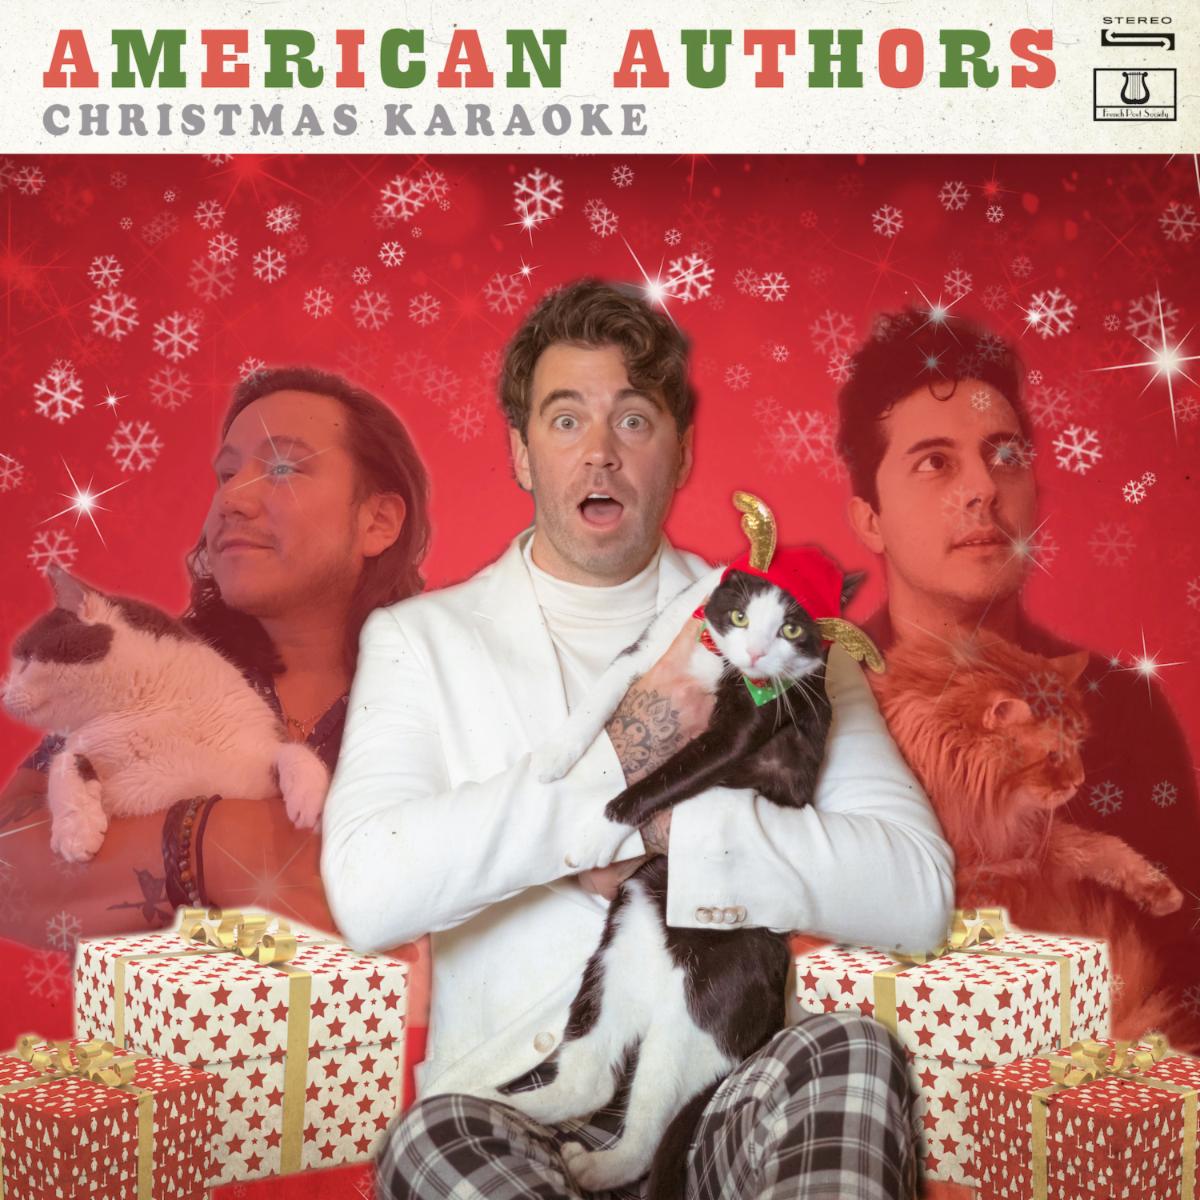 American Authors Celebrates The Season With “Christmas Karaoke”